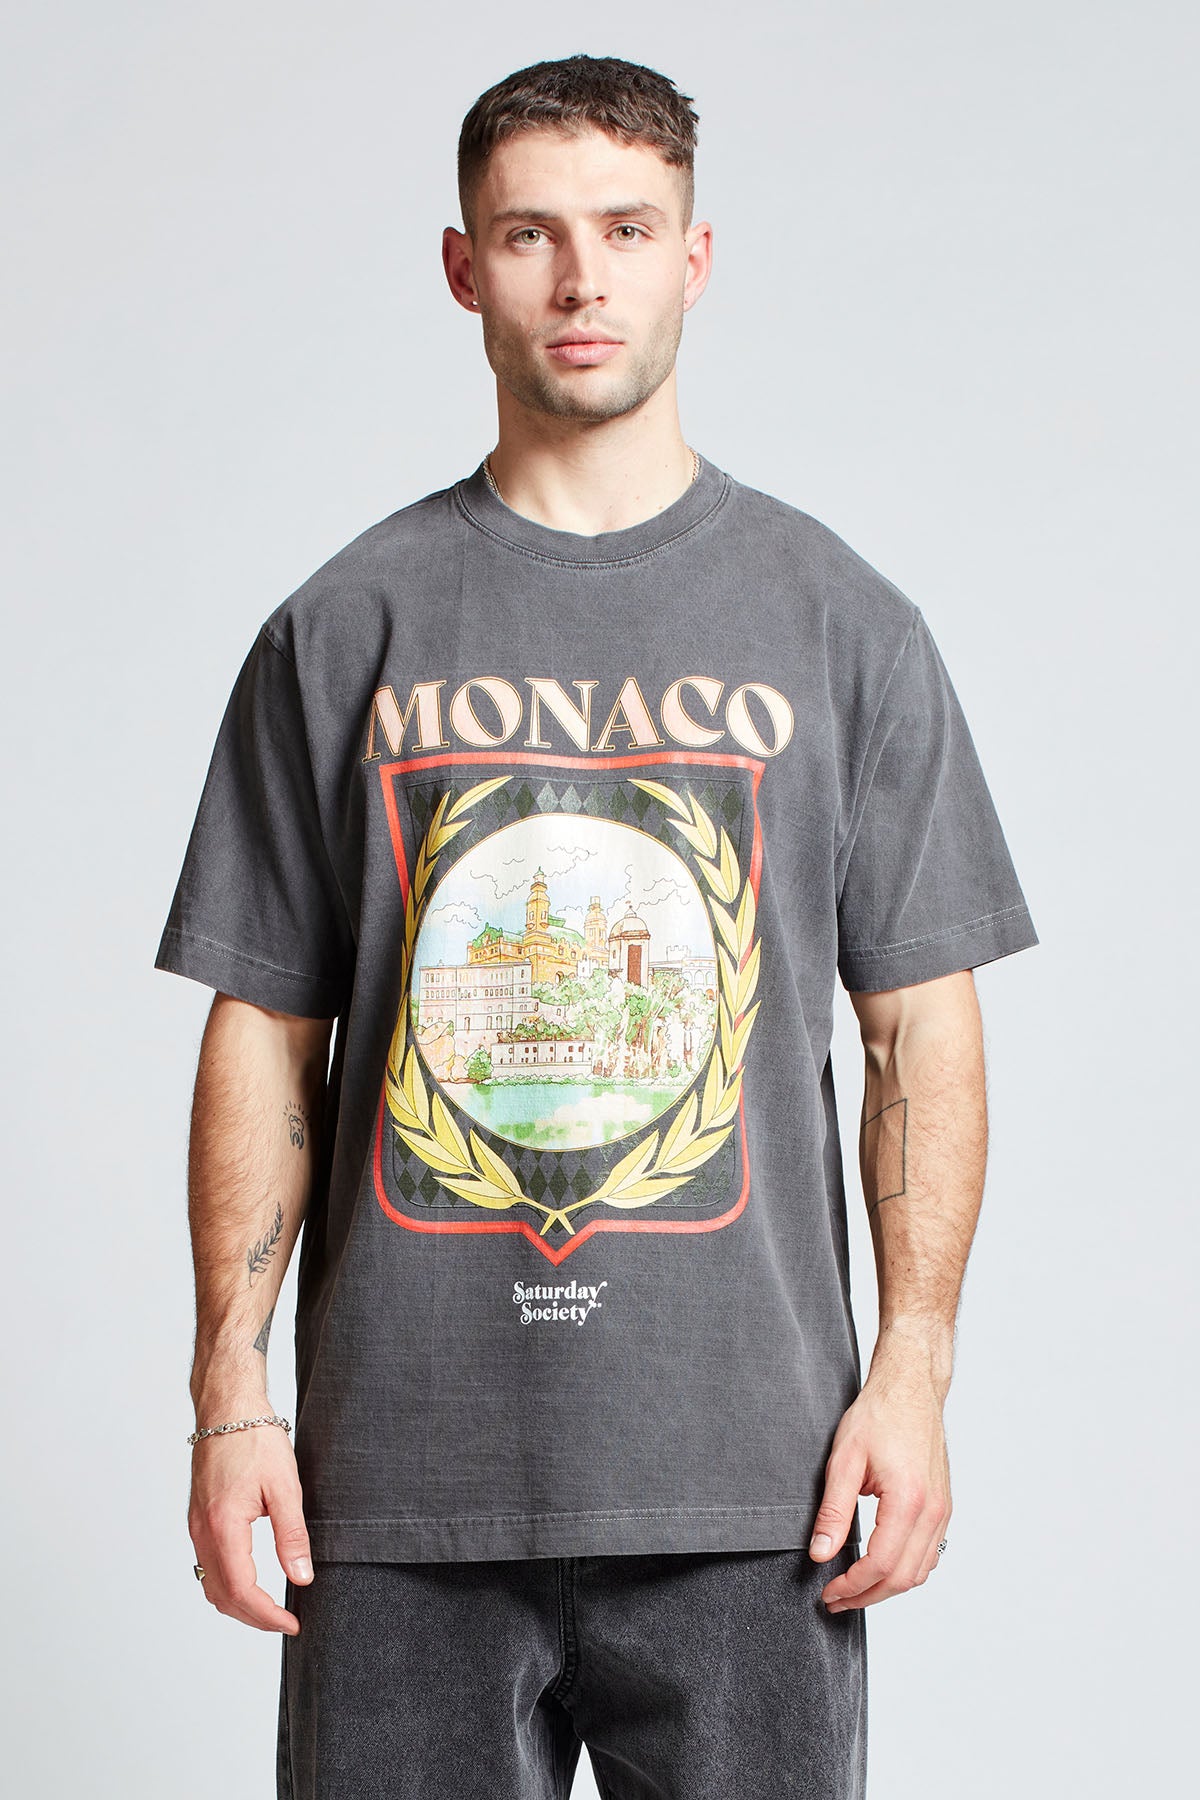 Saturday Society Monaco T-shirt in Washed Grey